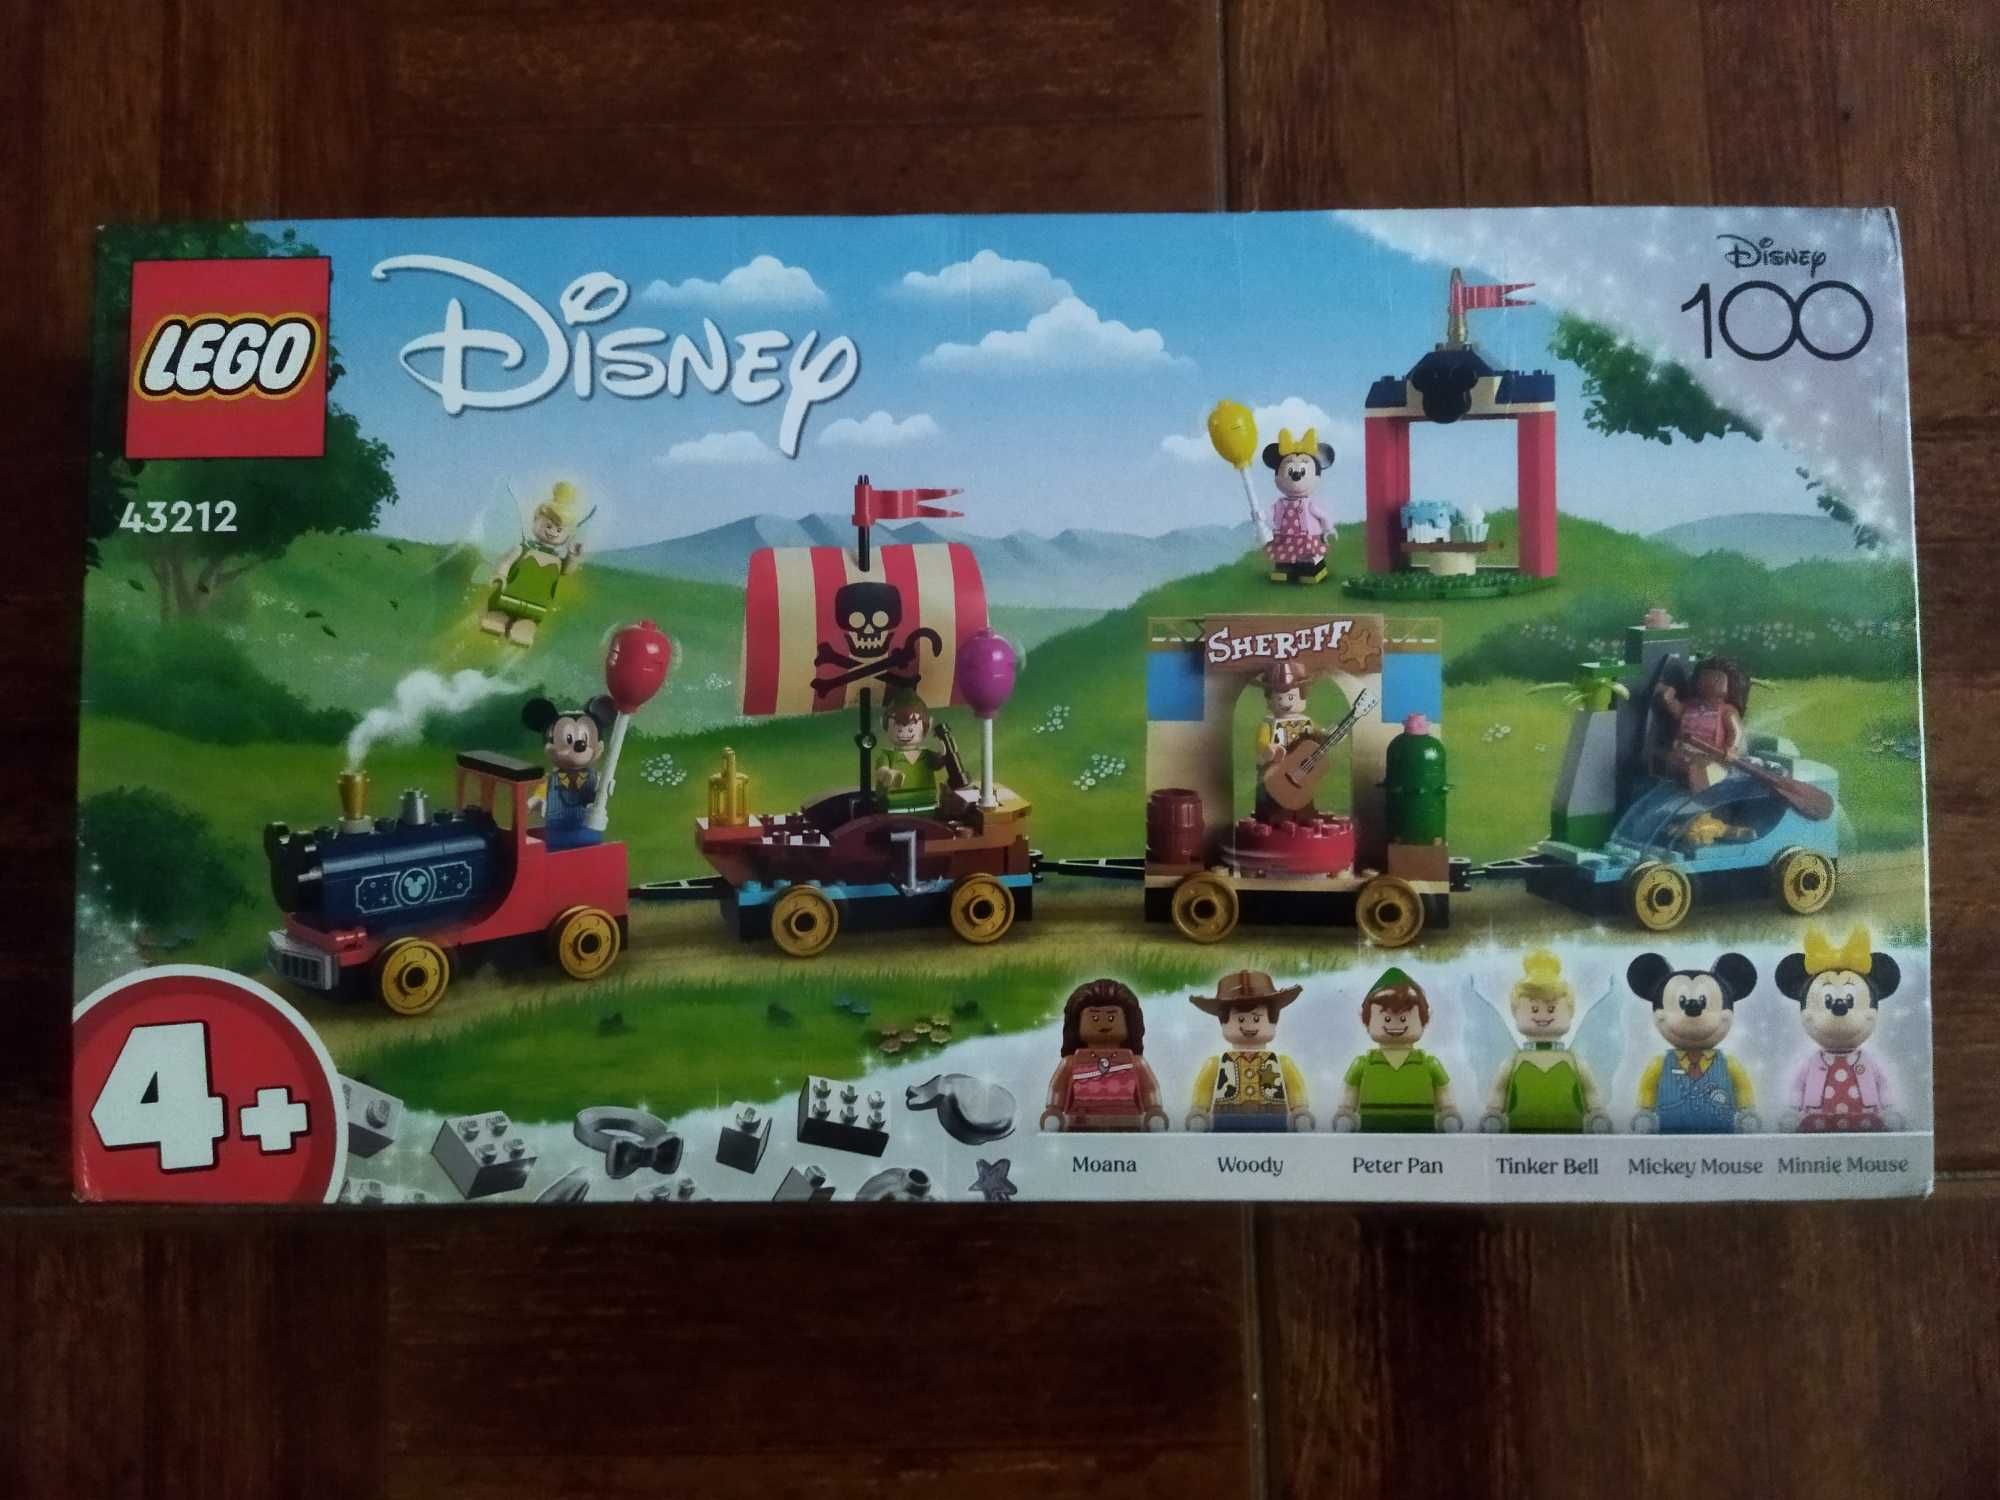 43212 Lego Disney - Disney Celebration Train